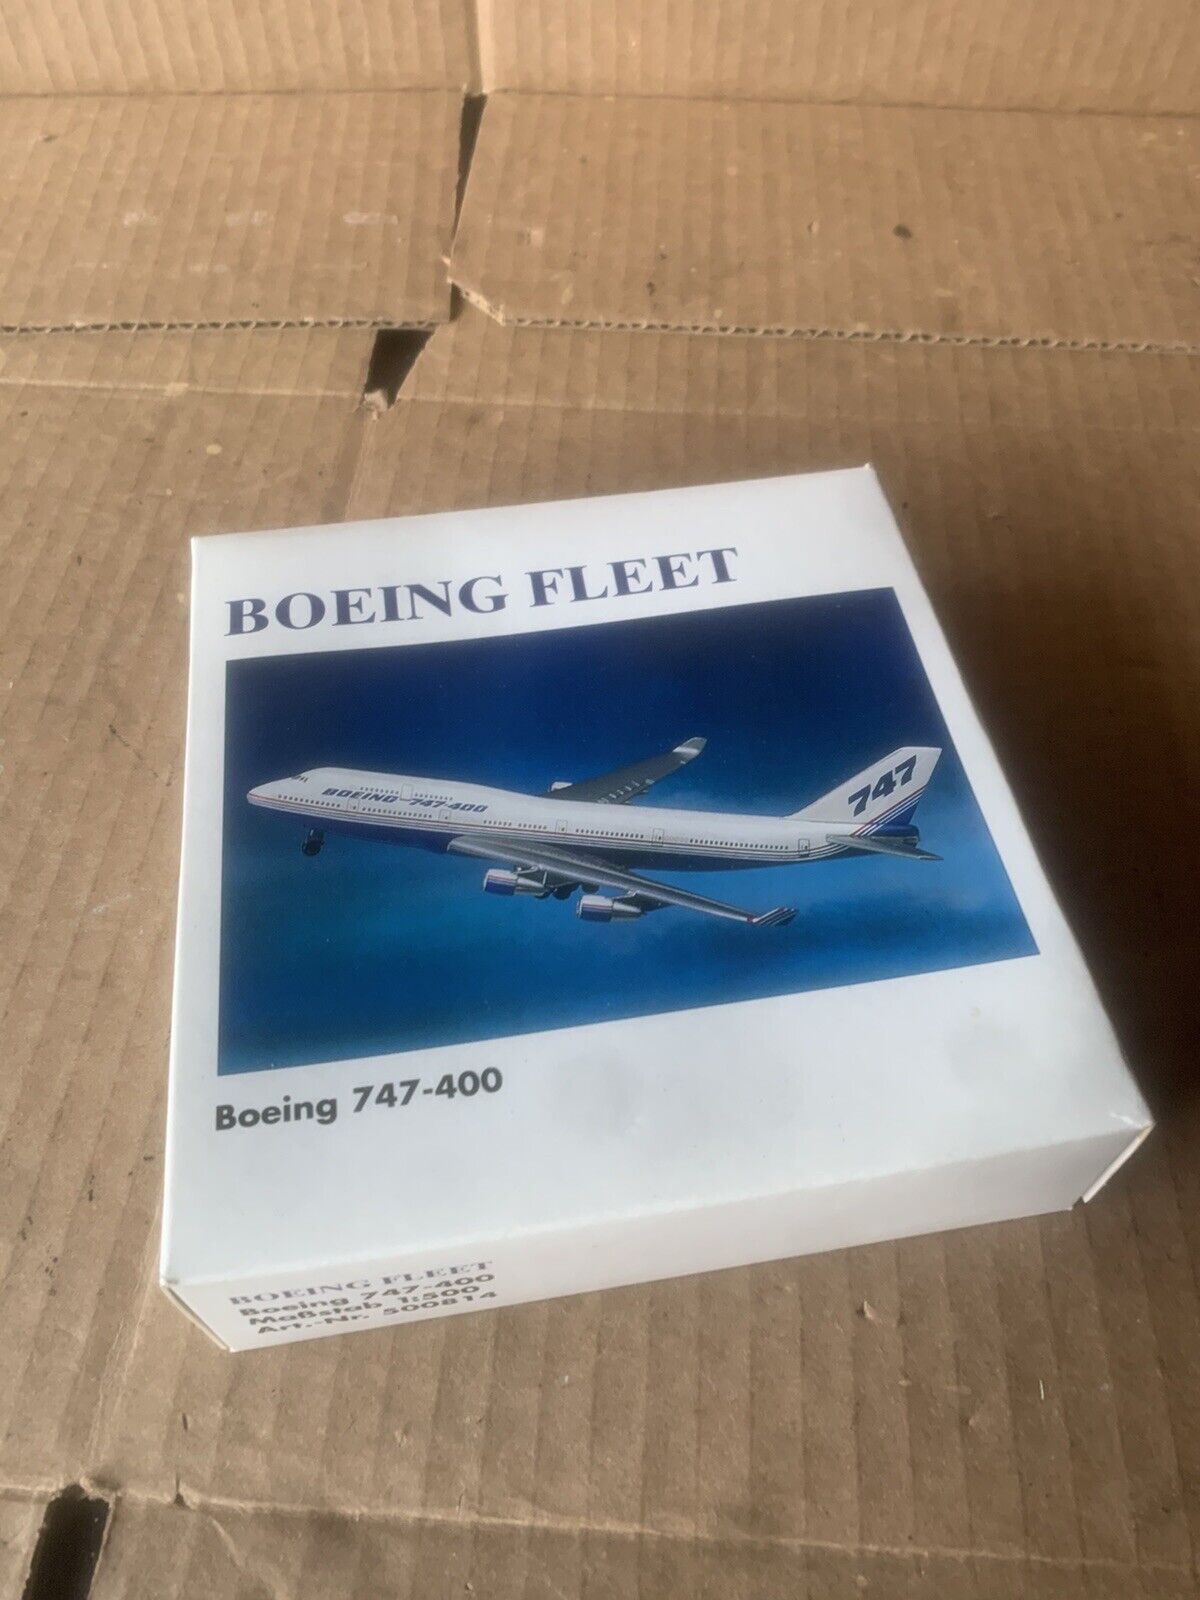 BOEING FLEET  747-400